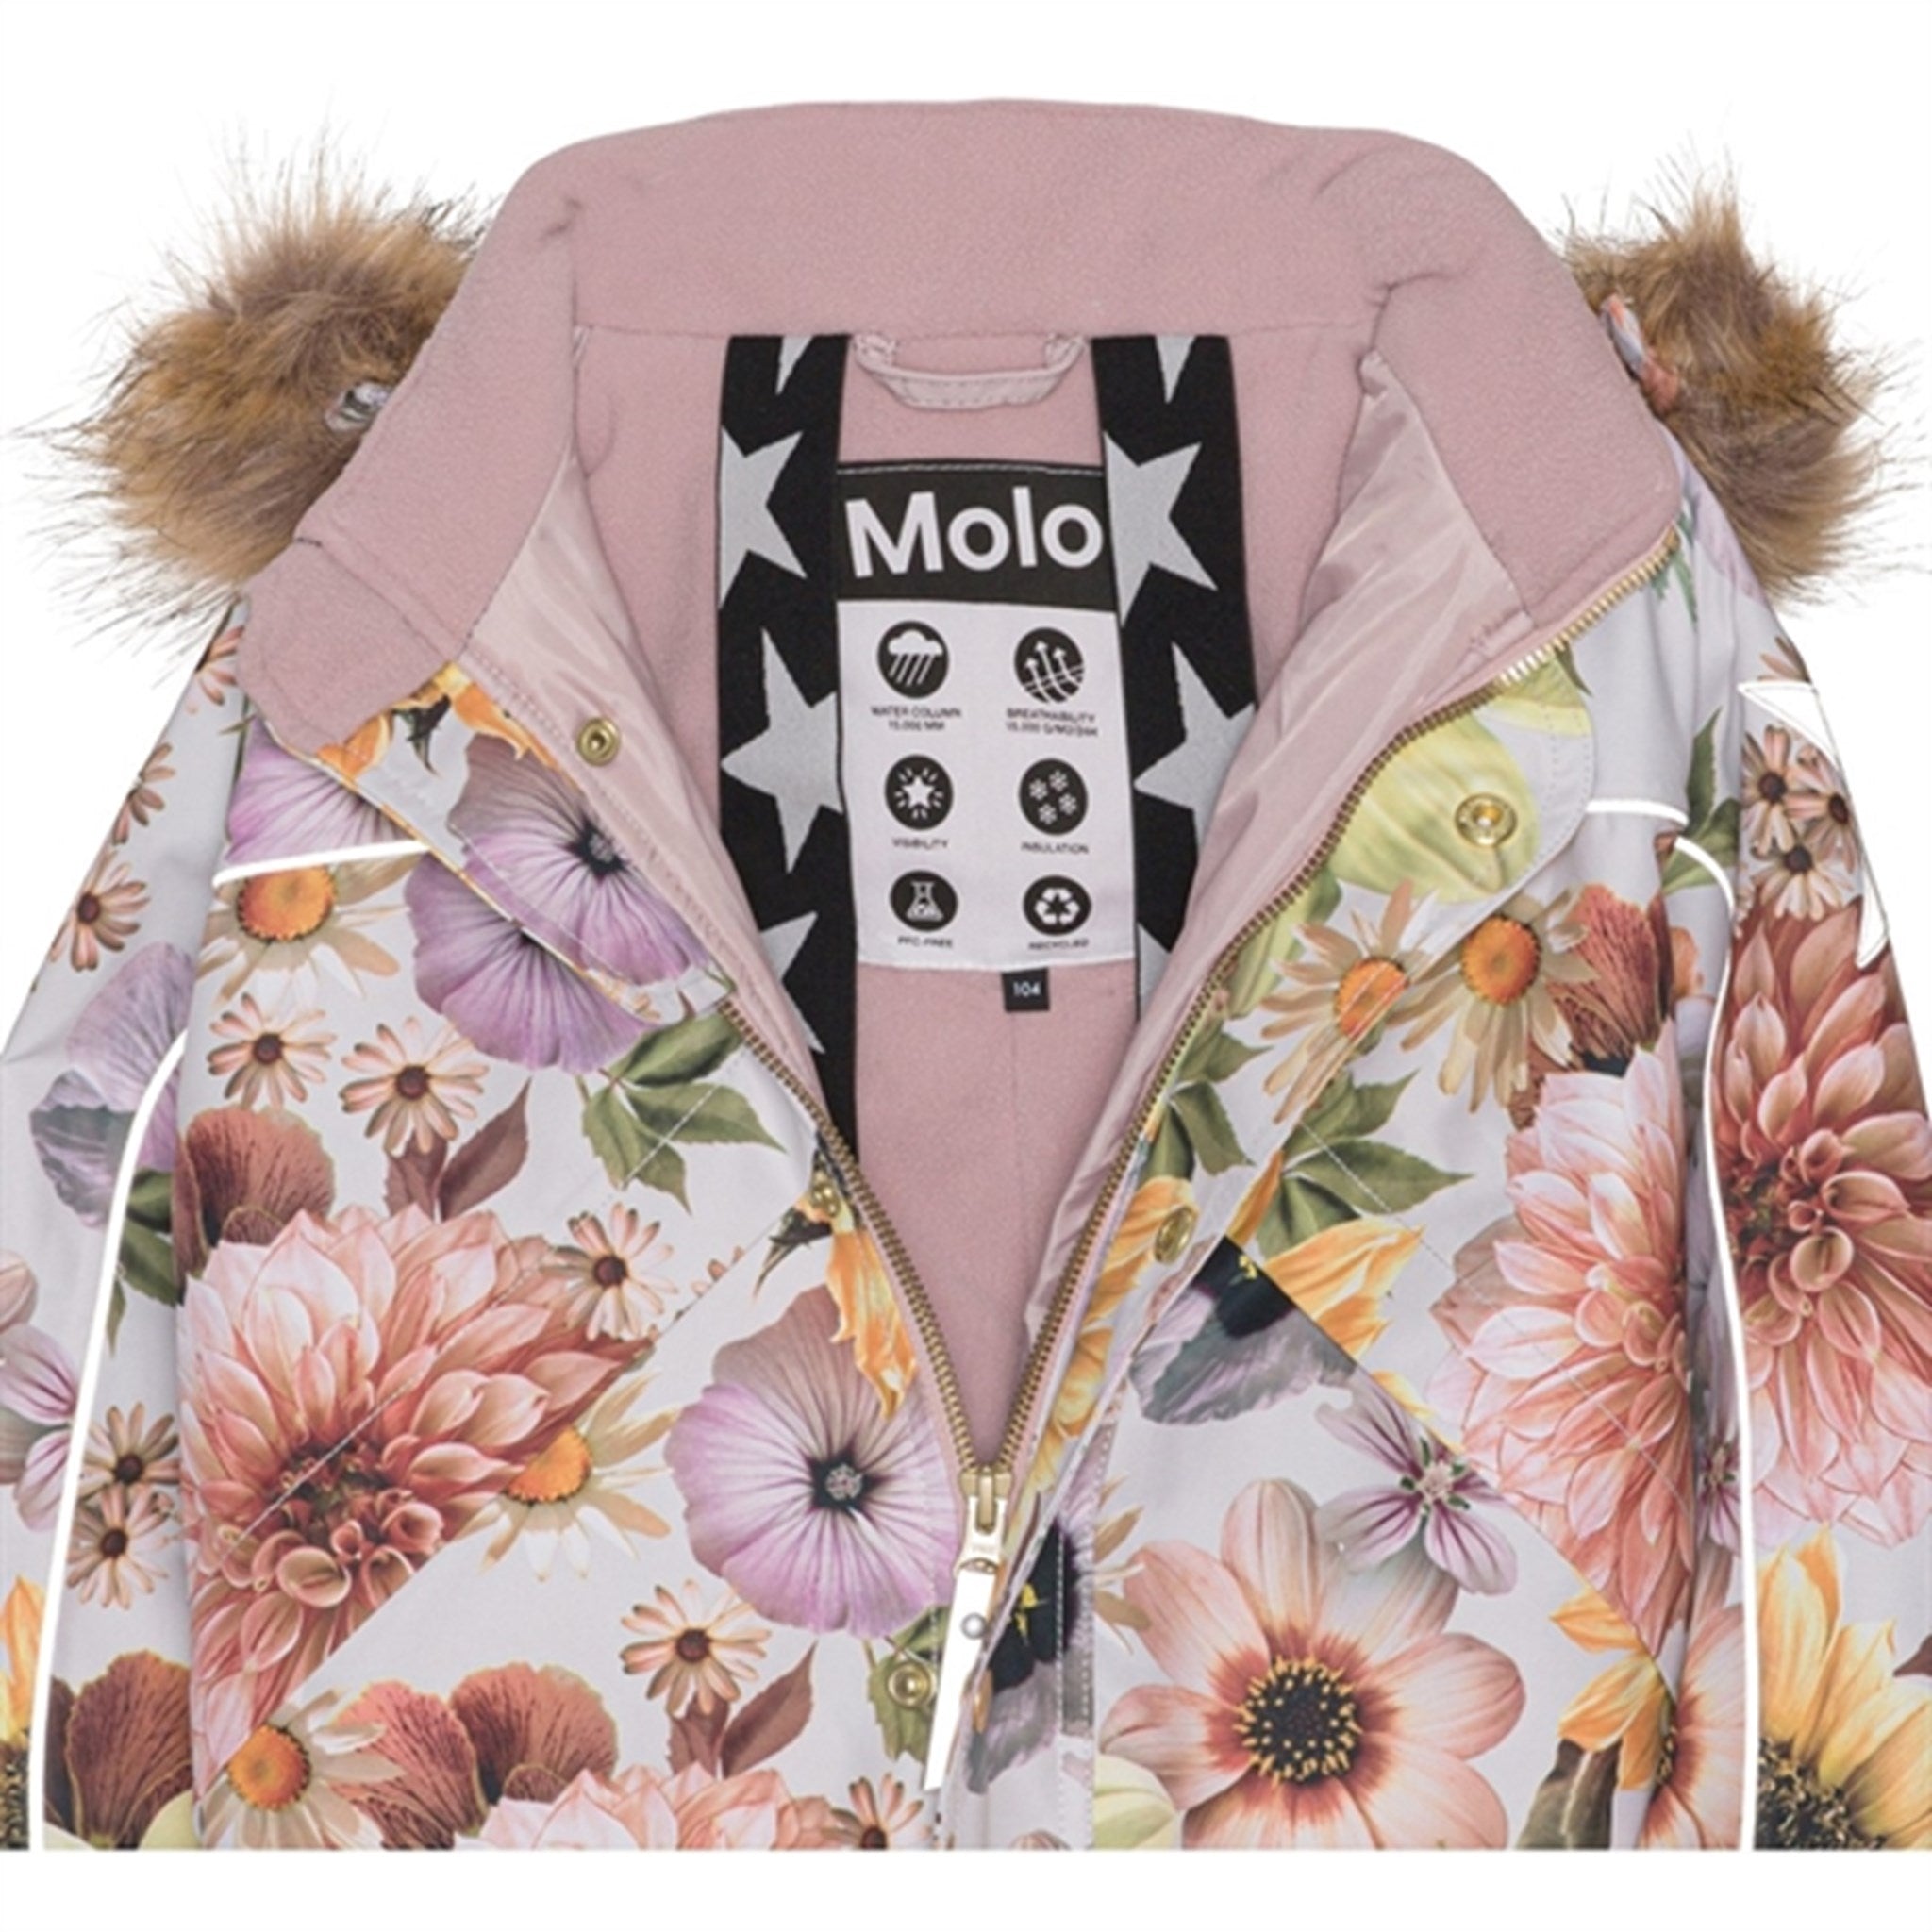 Molo Retro Flowers Polaris Fur Junior Dress 6